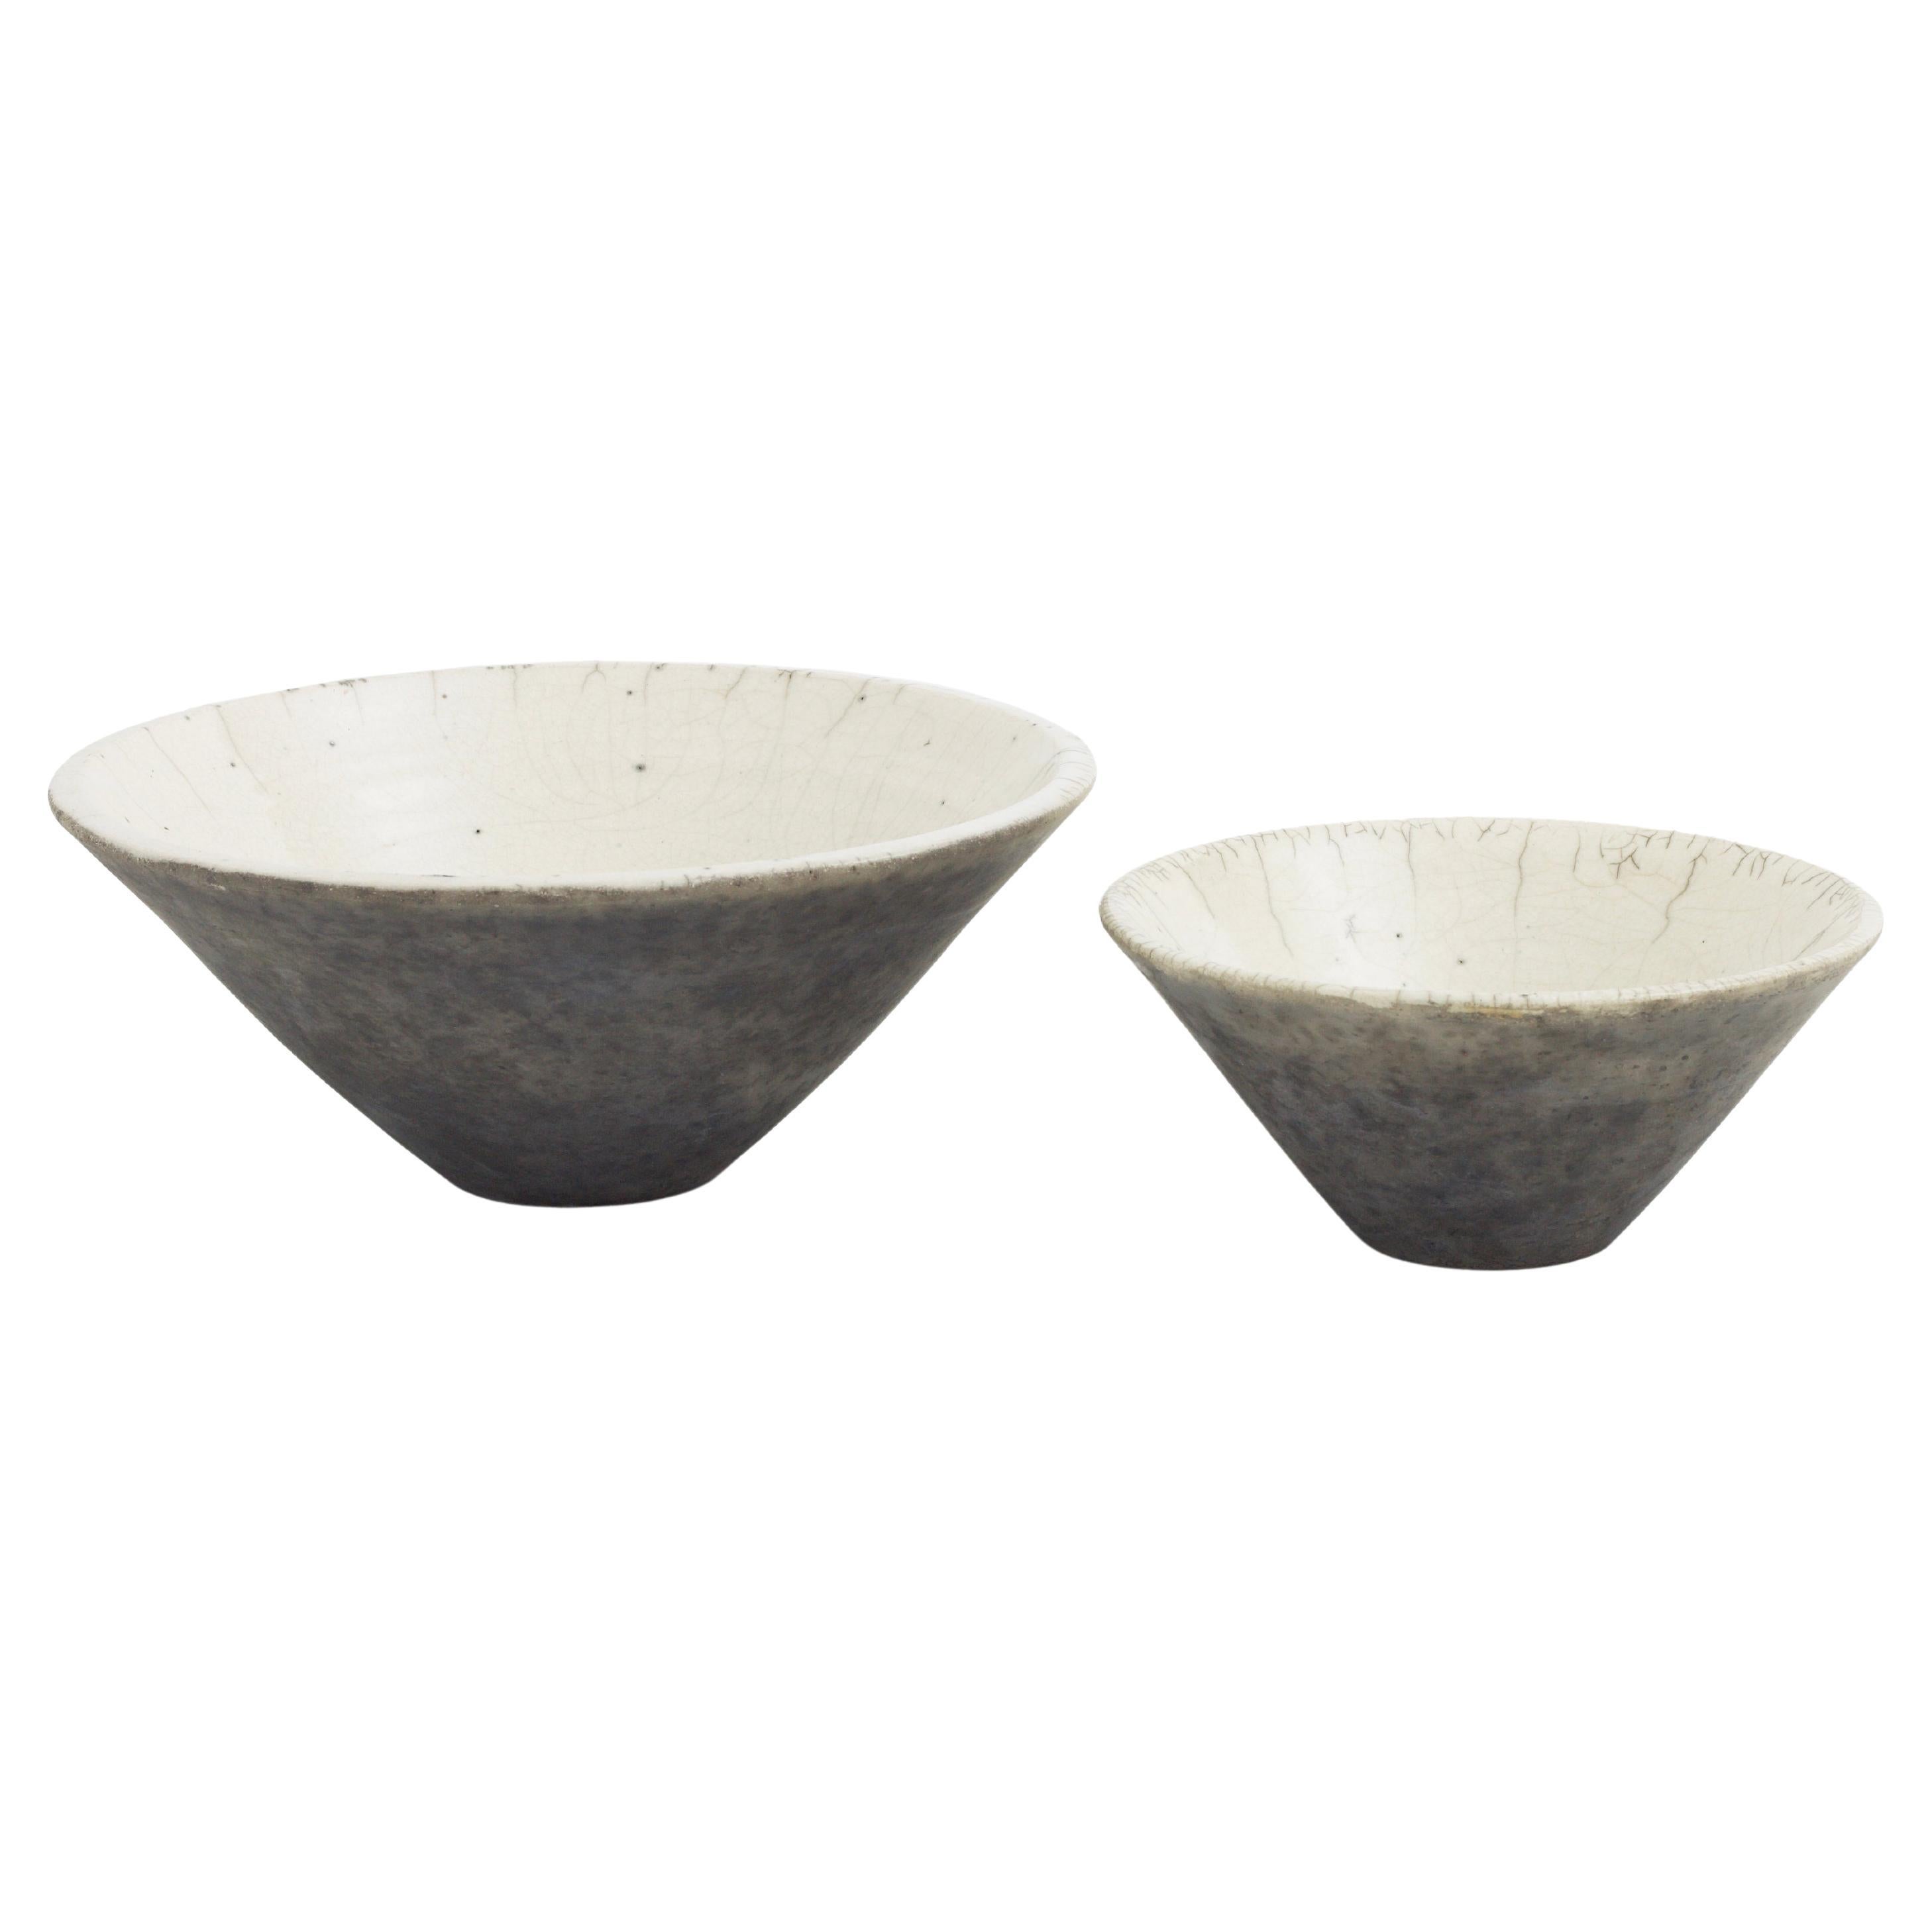 Japanese Modern LAAB Wu Set of 2 Bowls Raku Ceramics Crackle Black White For Sale